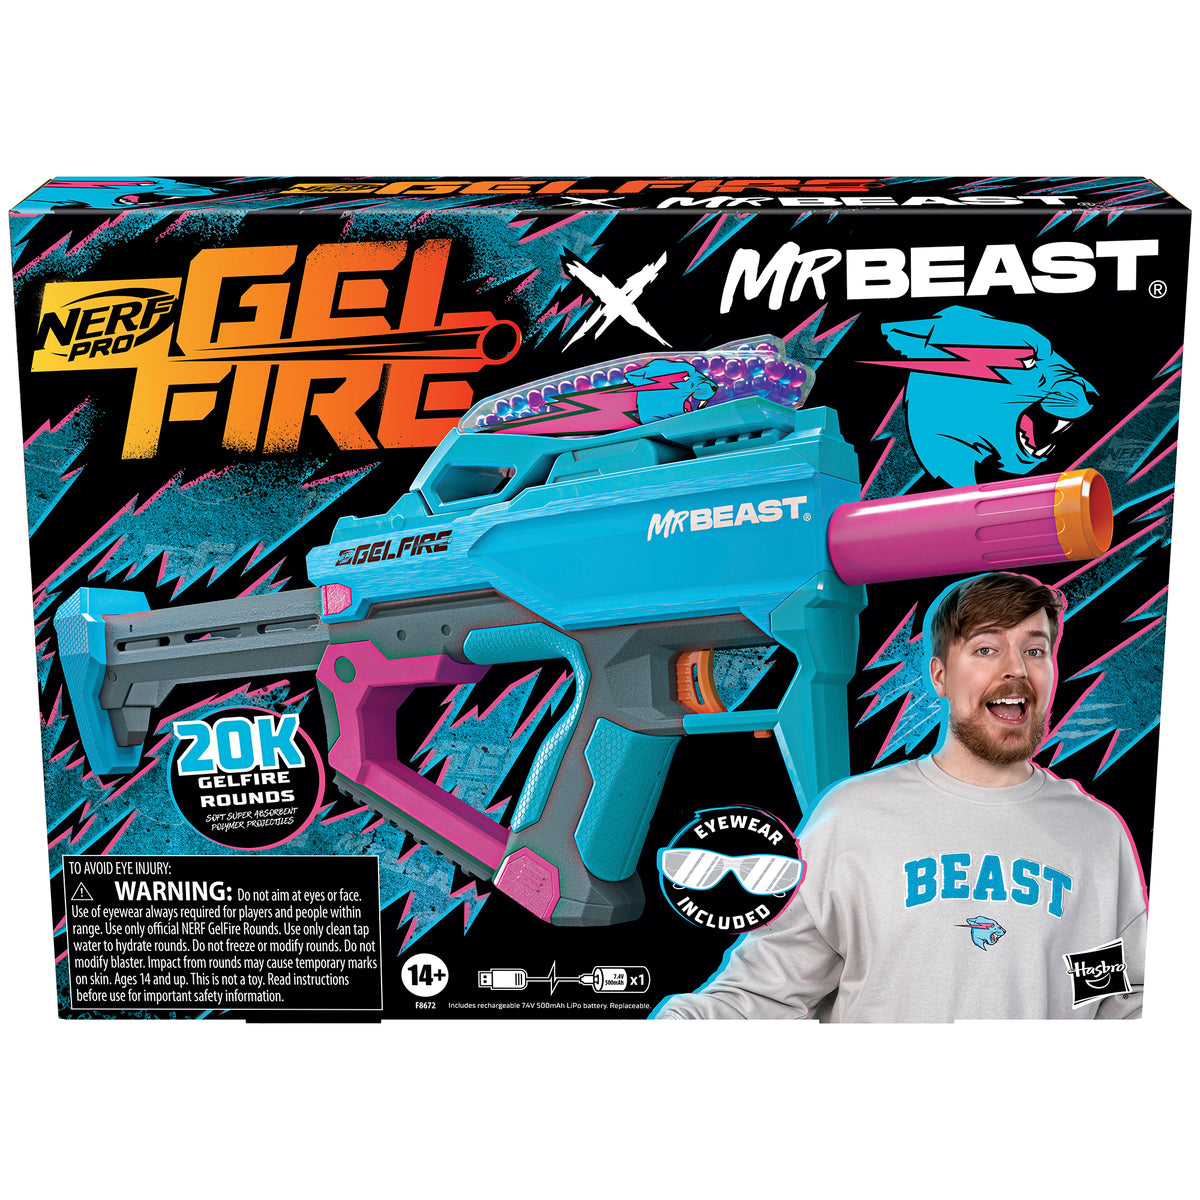 Nerf Pro Gelfire X MrBeast – Hasbro Pulse